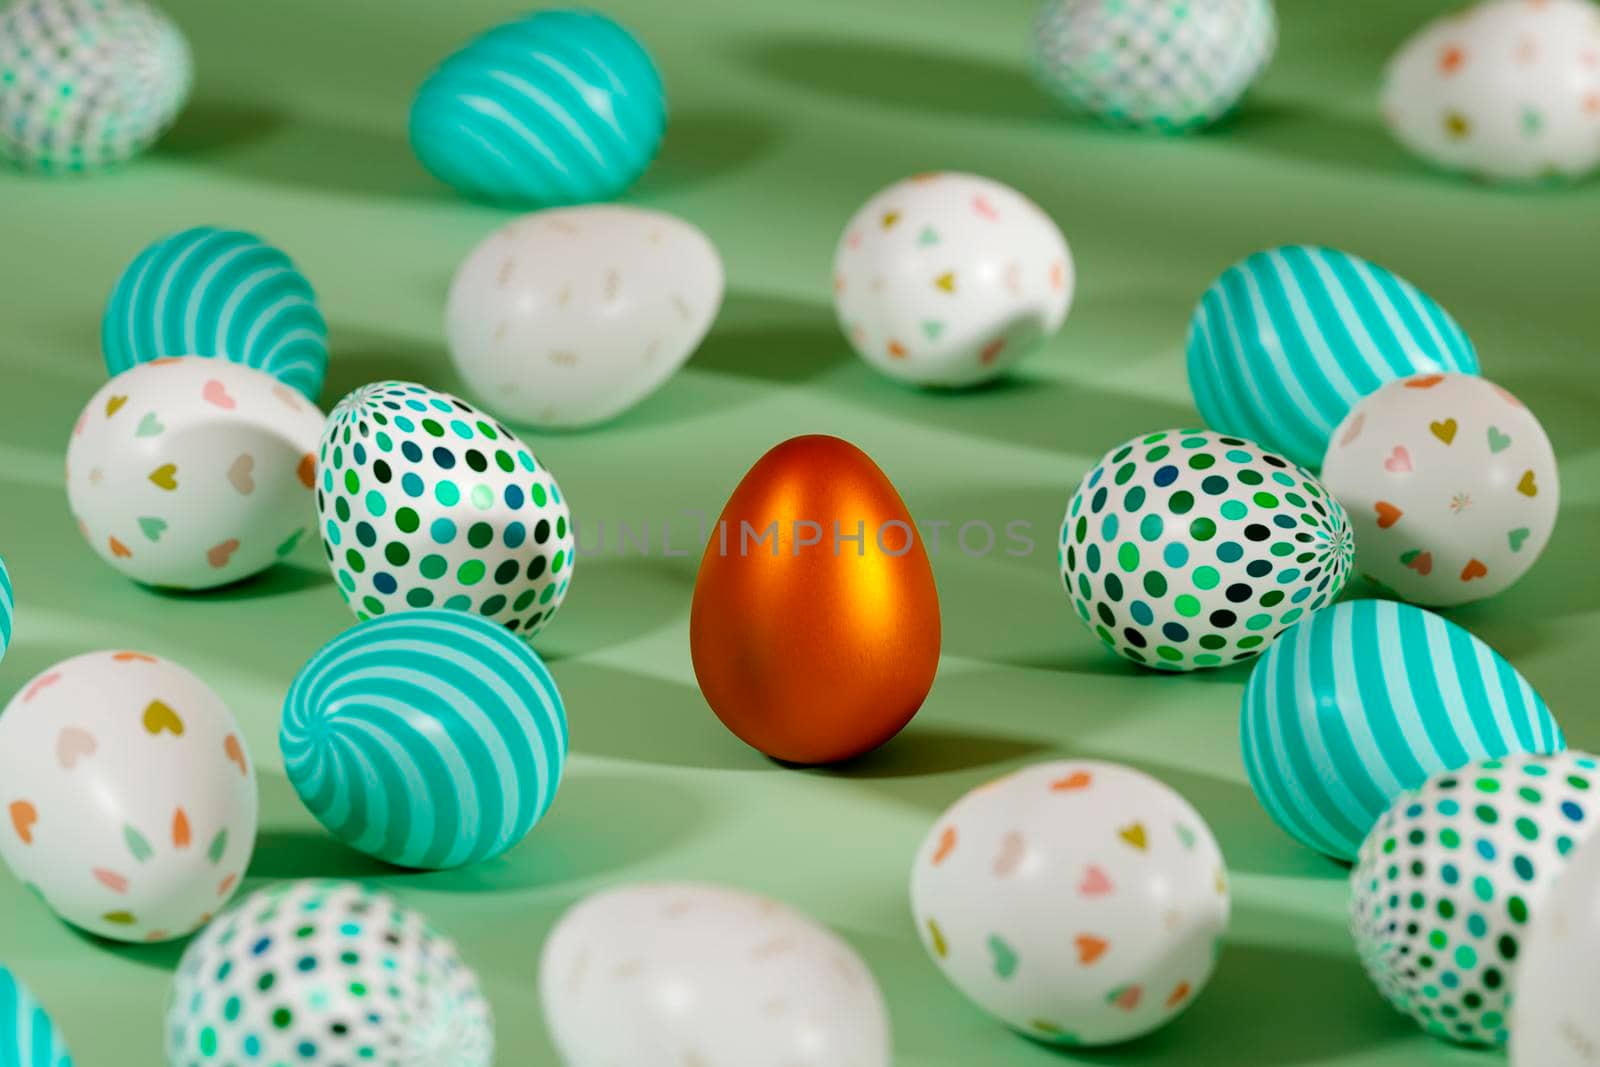 Colored Easter eggs surrounding golden egg on green background. 3d render